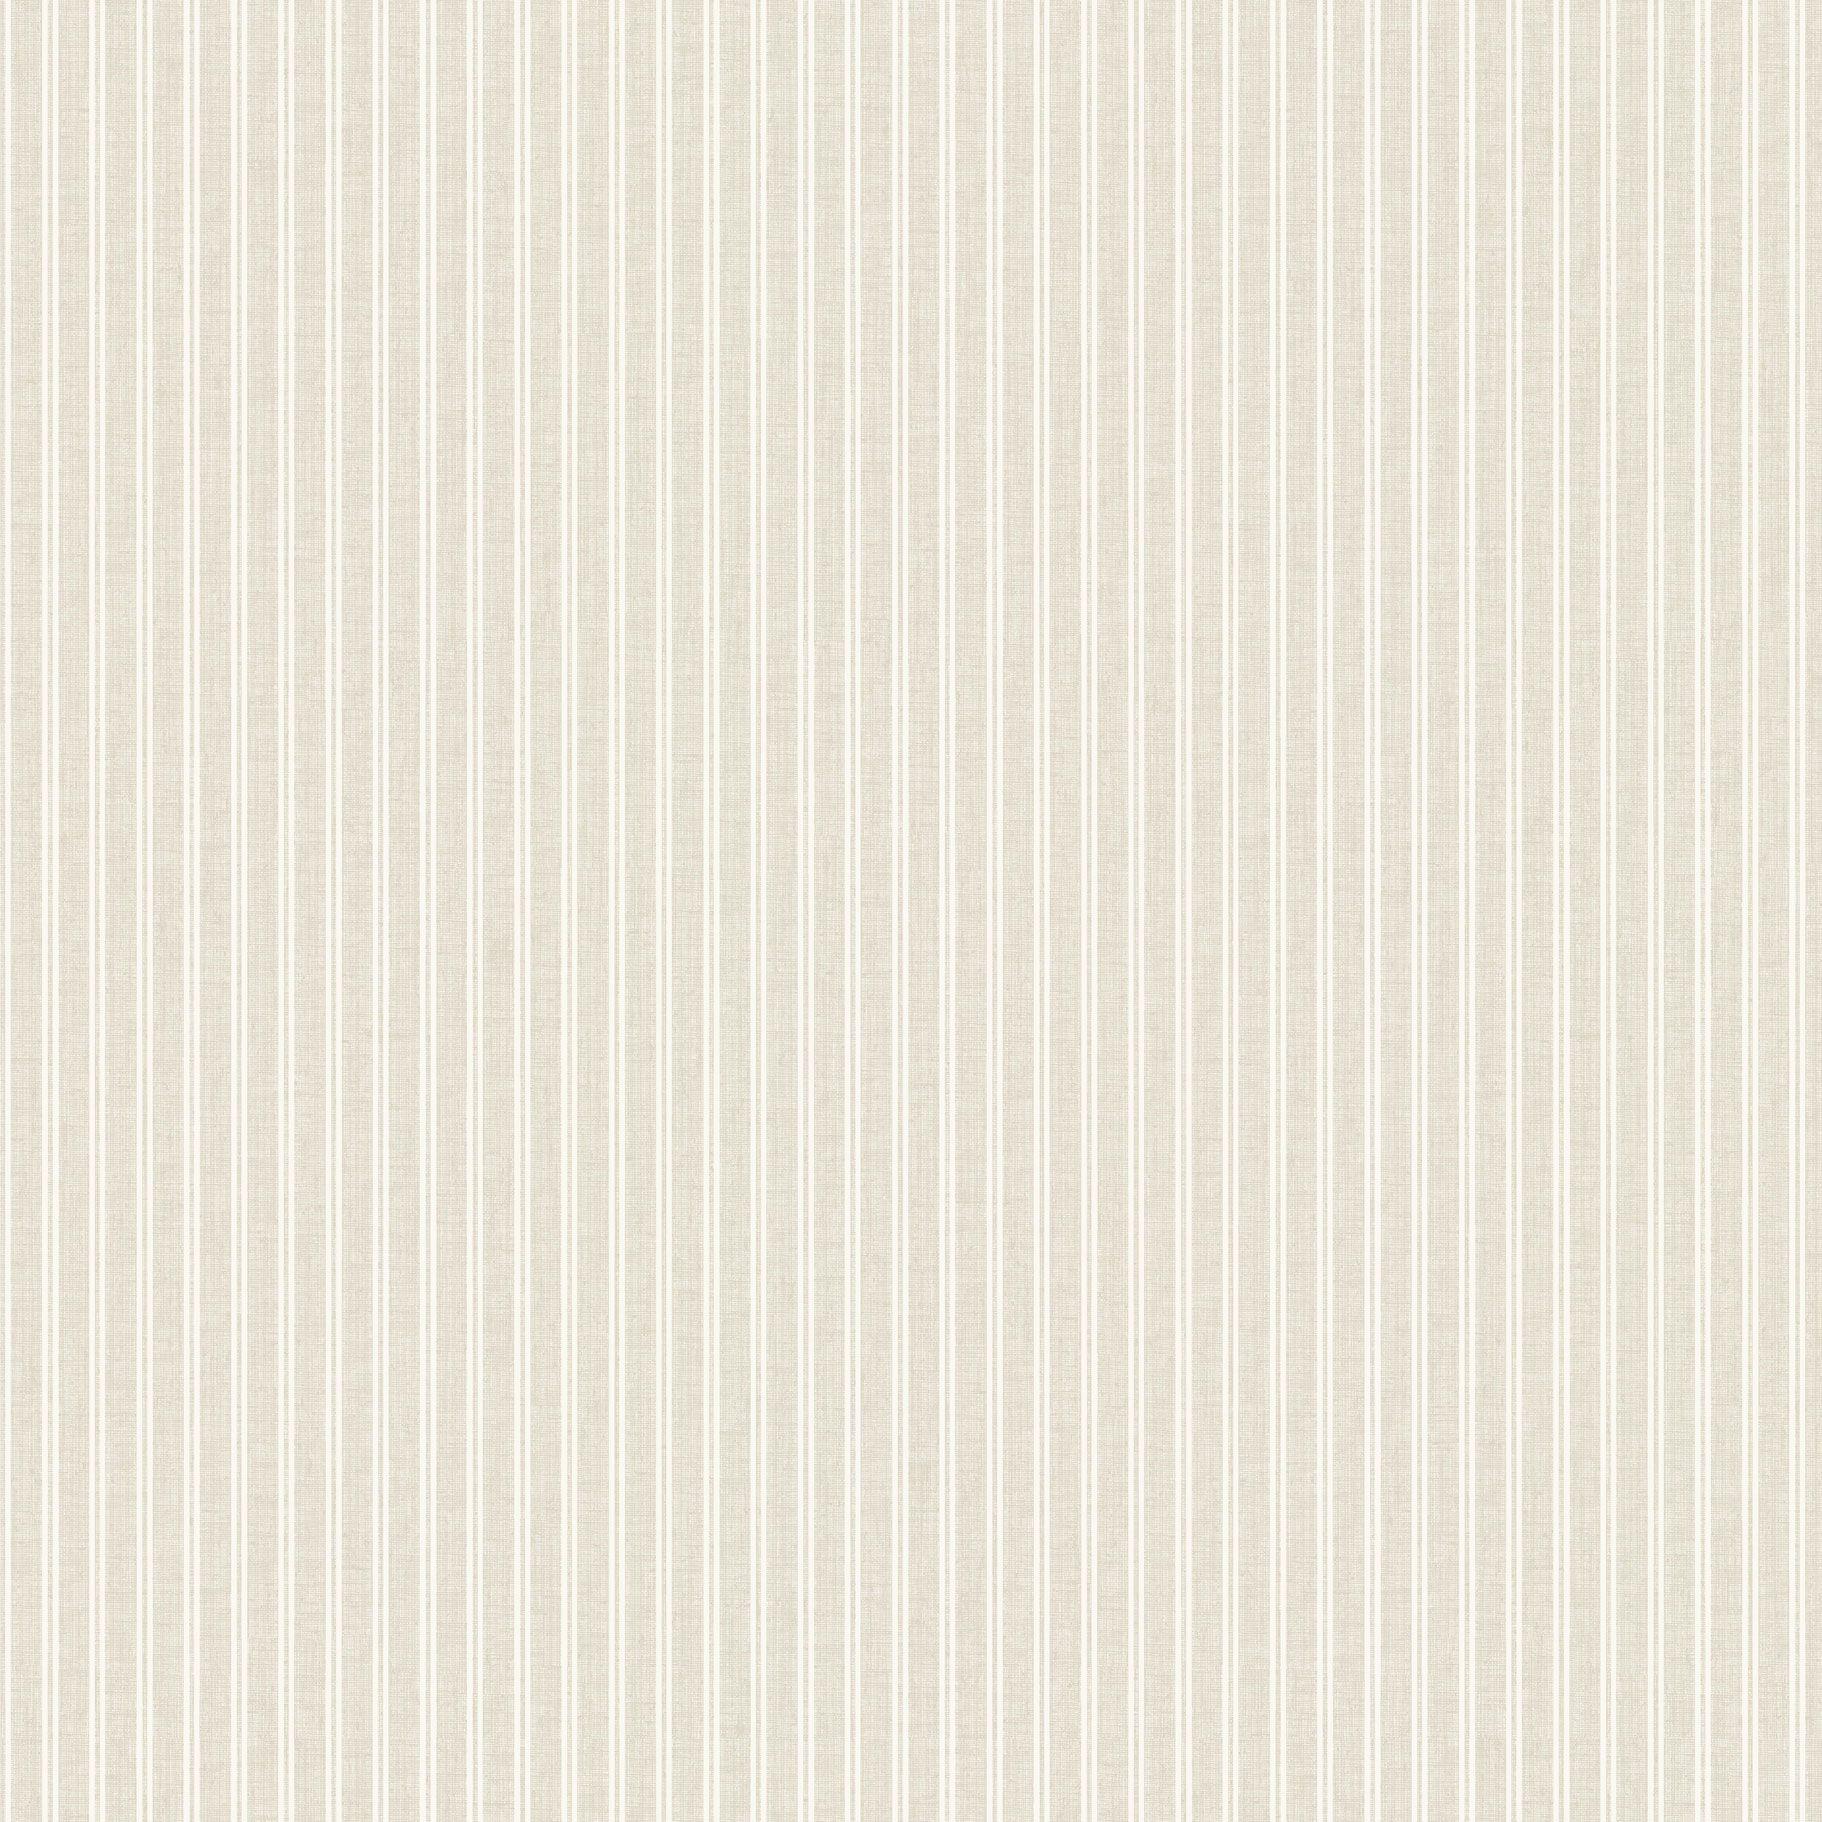 1822 x 1822 · jpeg - New Ticking Stripe Wallpaper - Cream | Striped wallpaper, Stripe ...